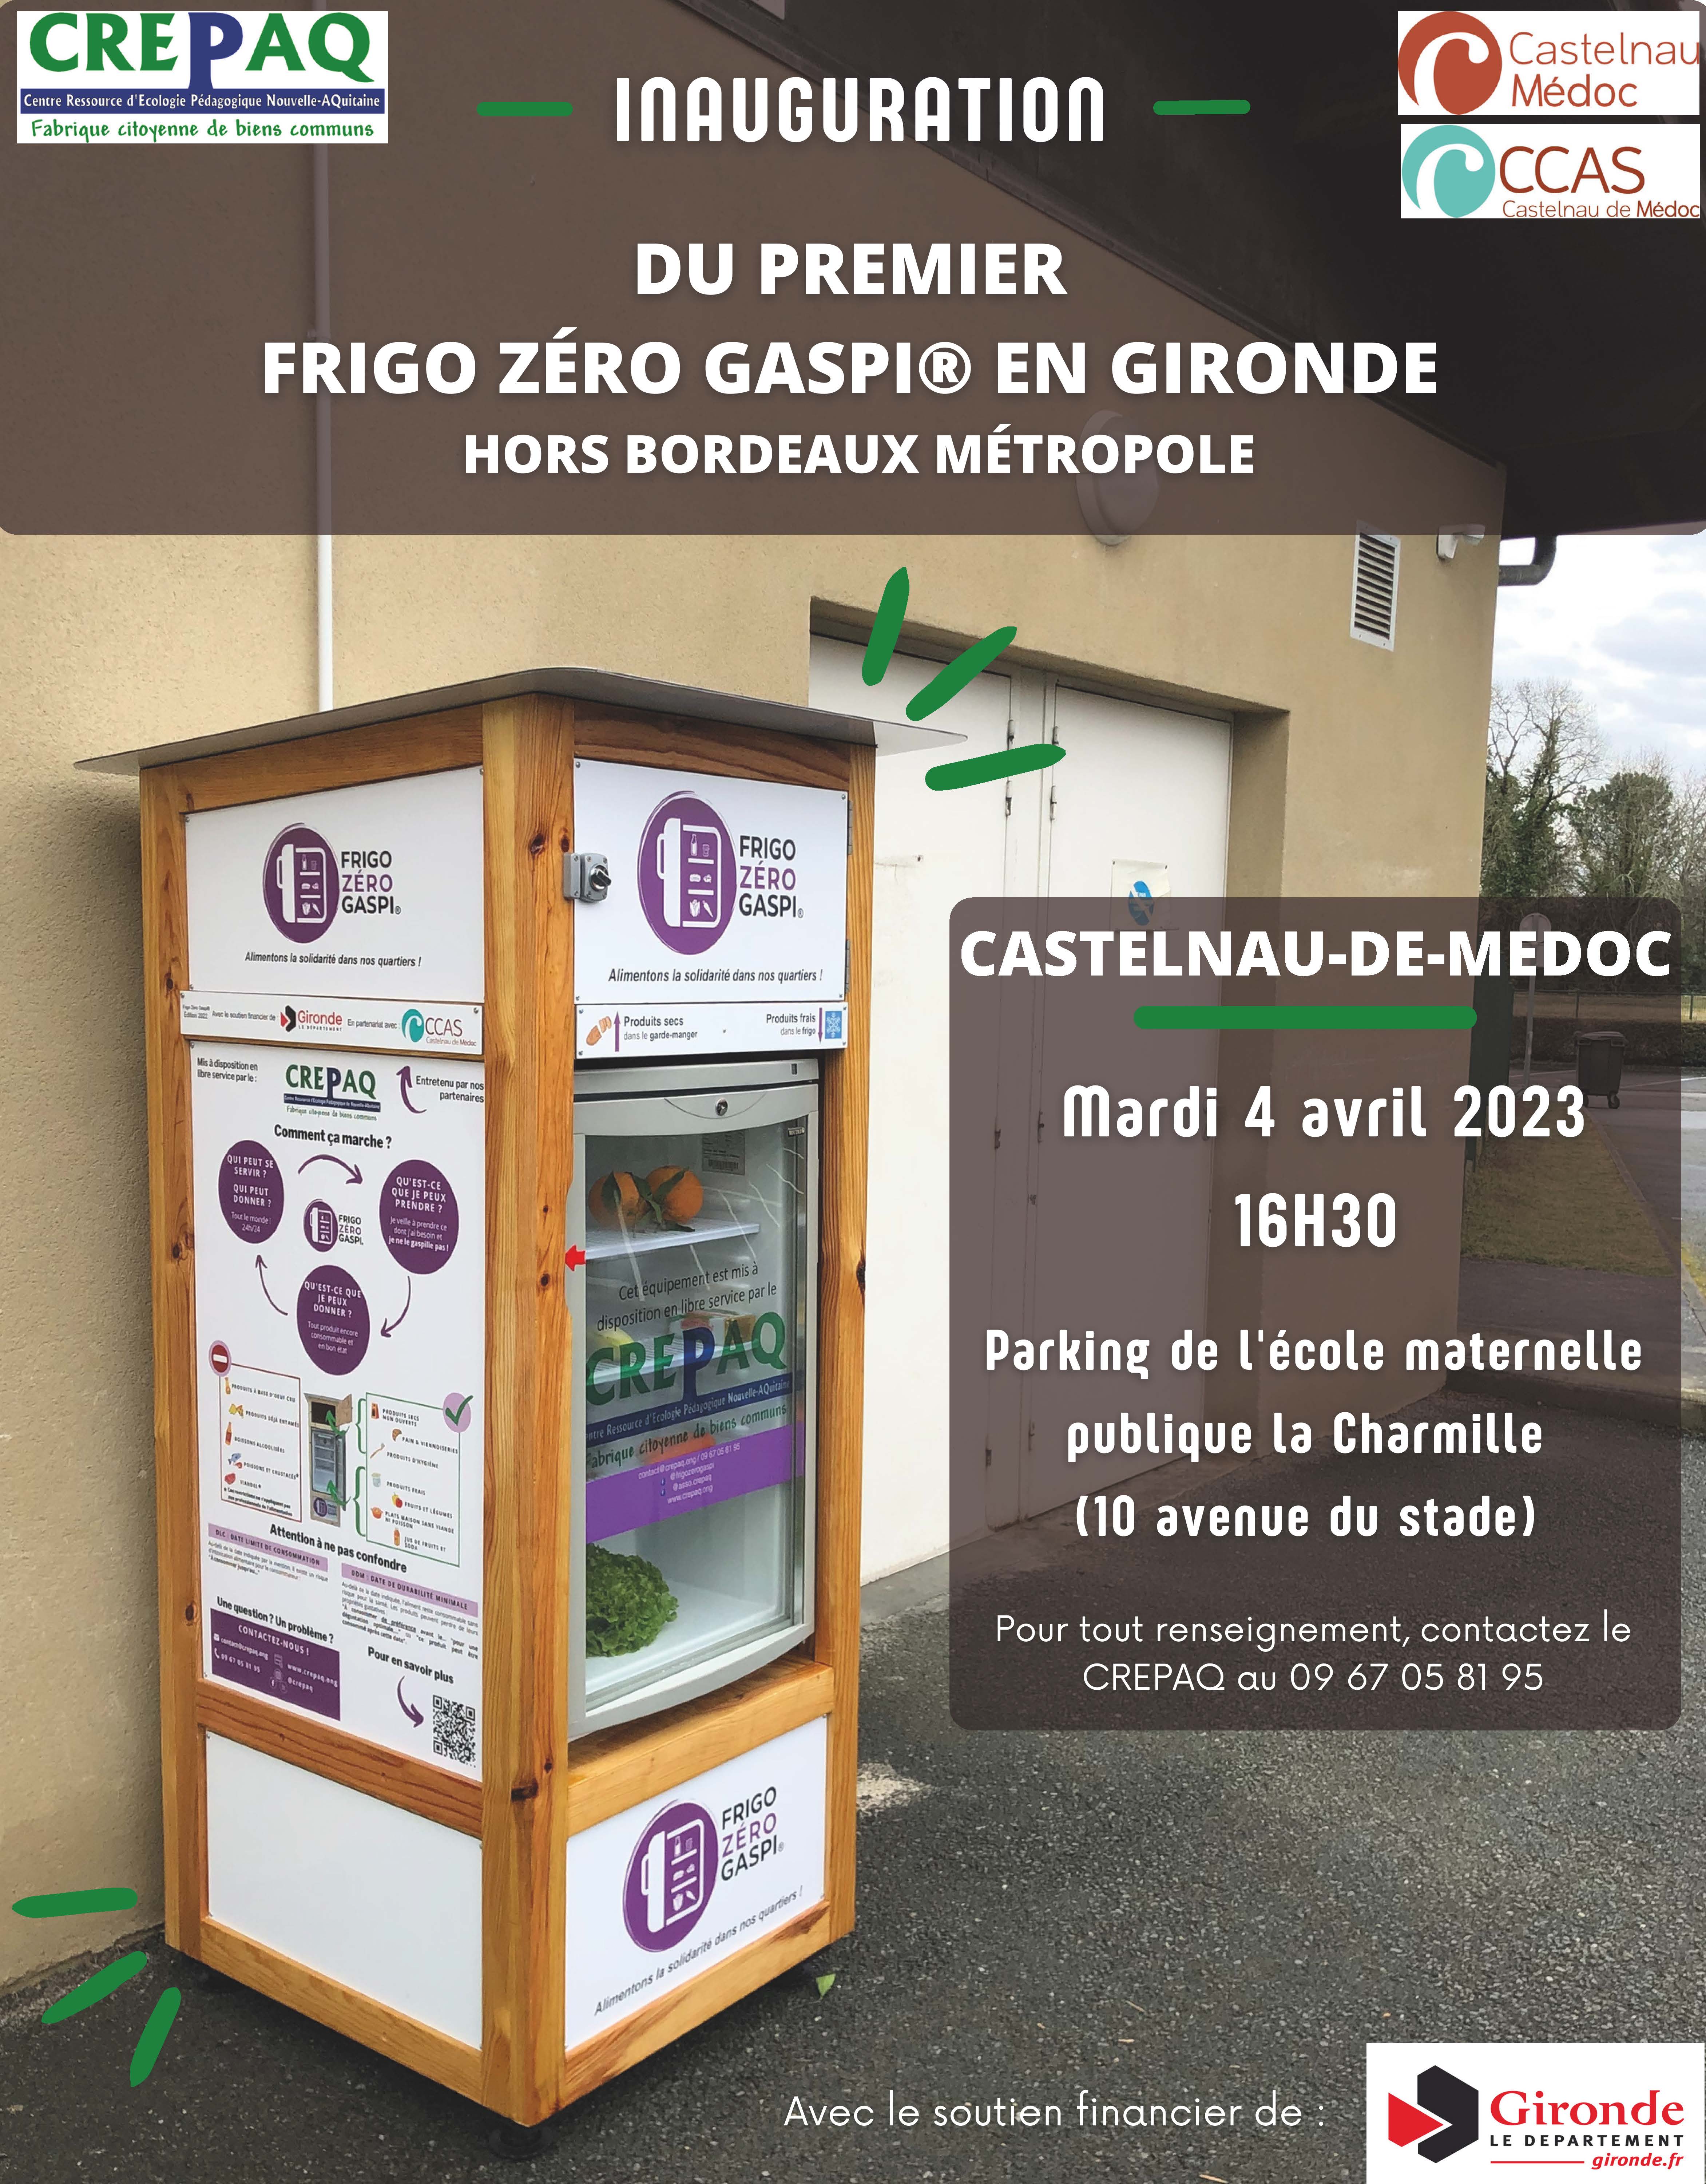 Invitation Inauguration FZG Castelnau V2